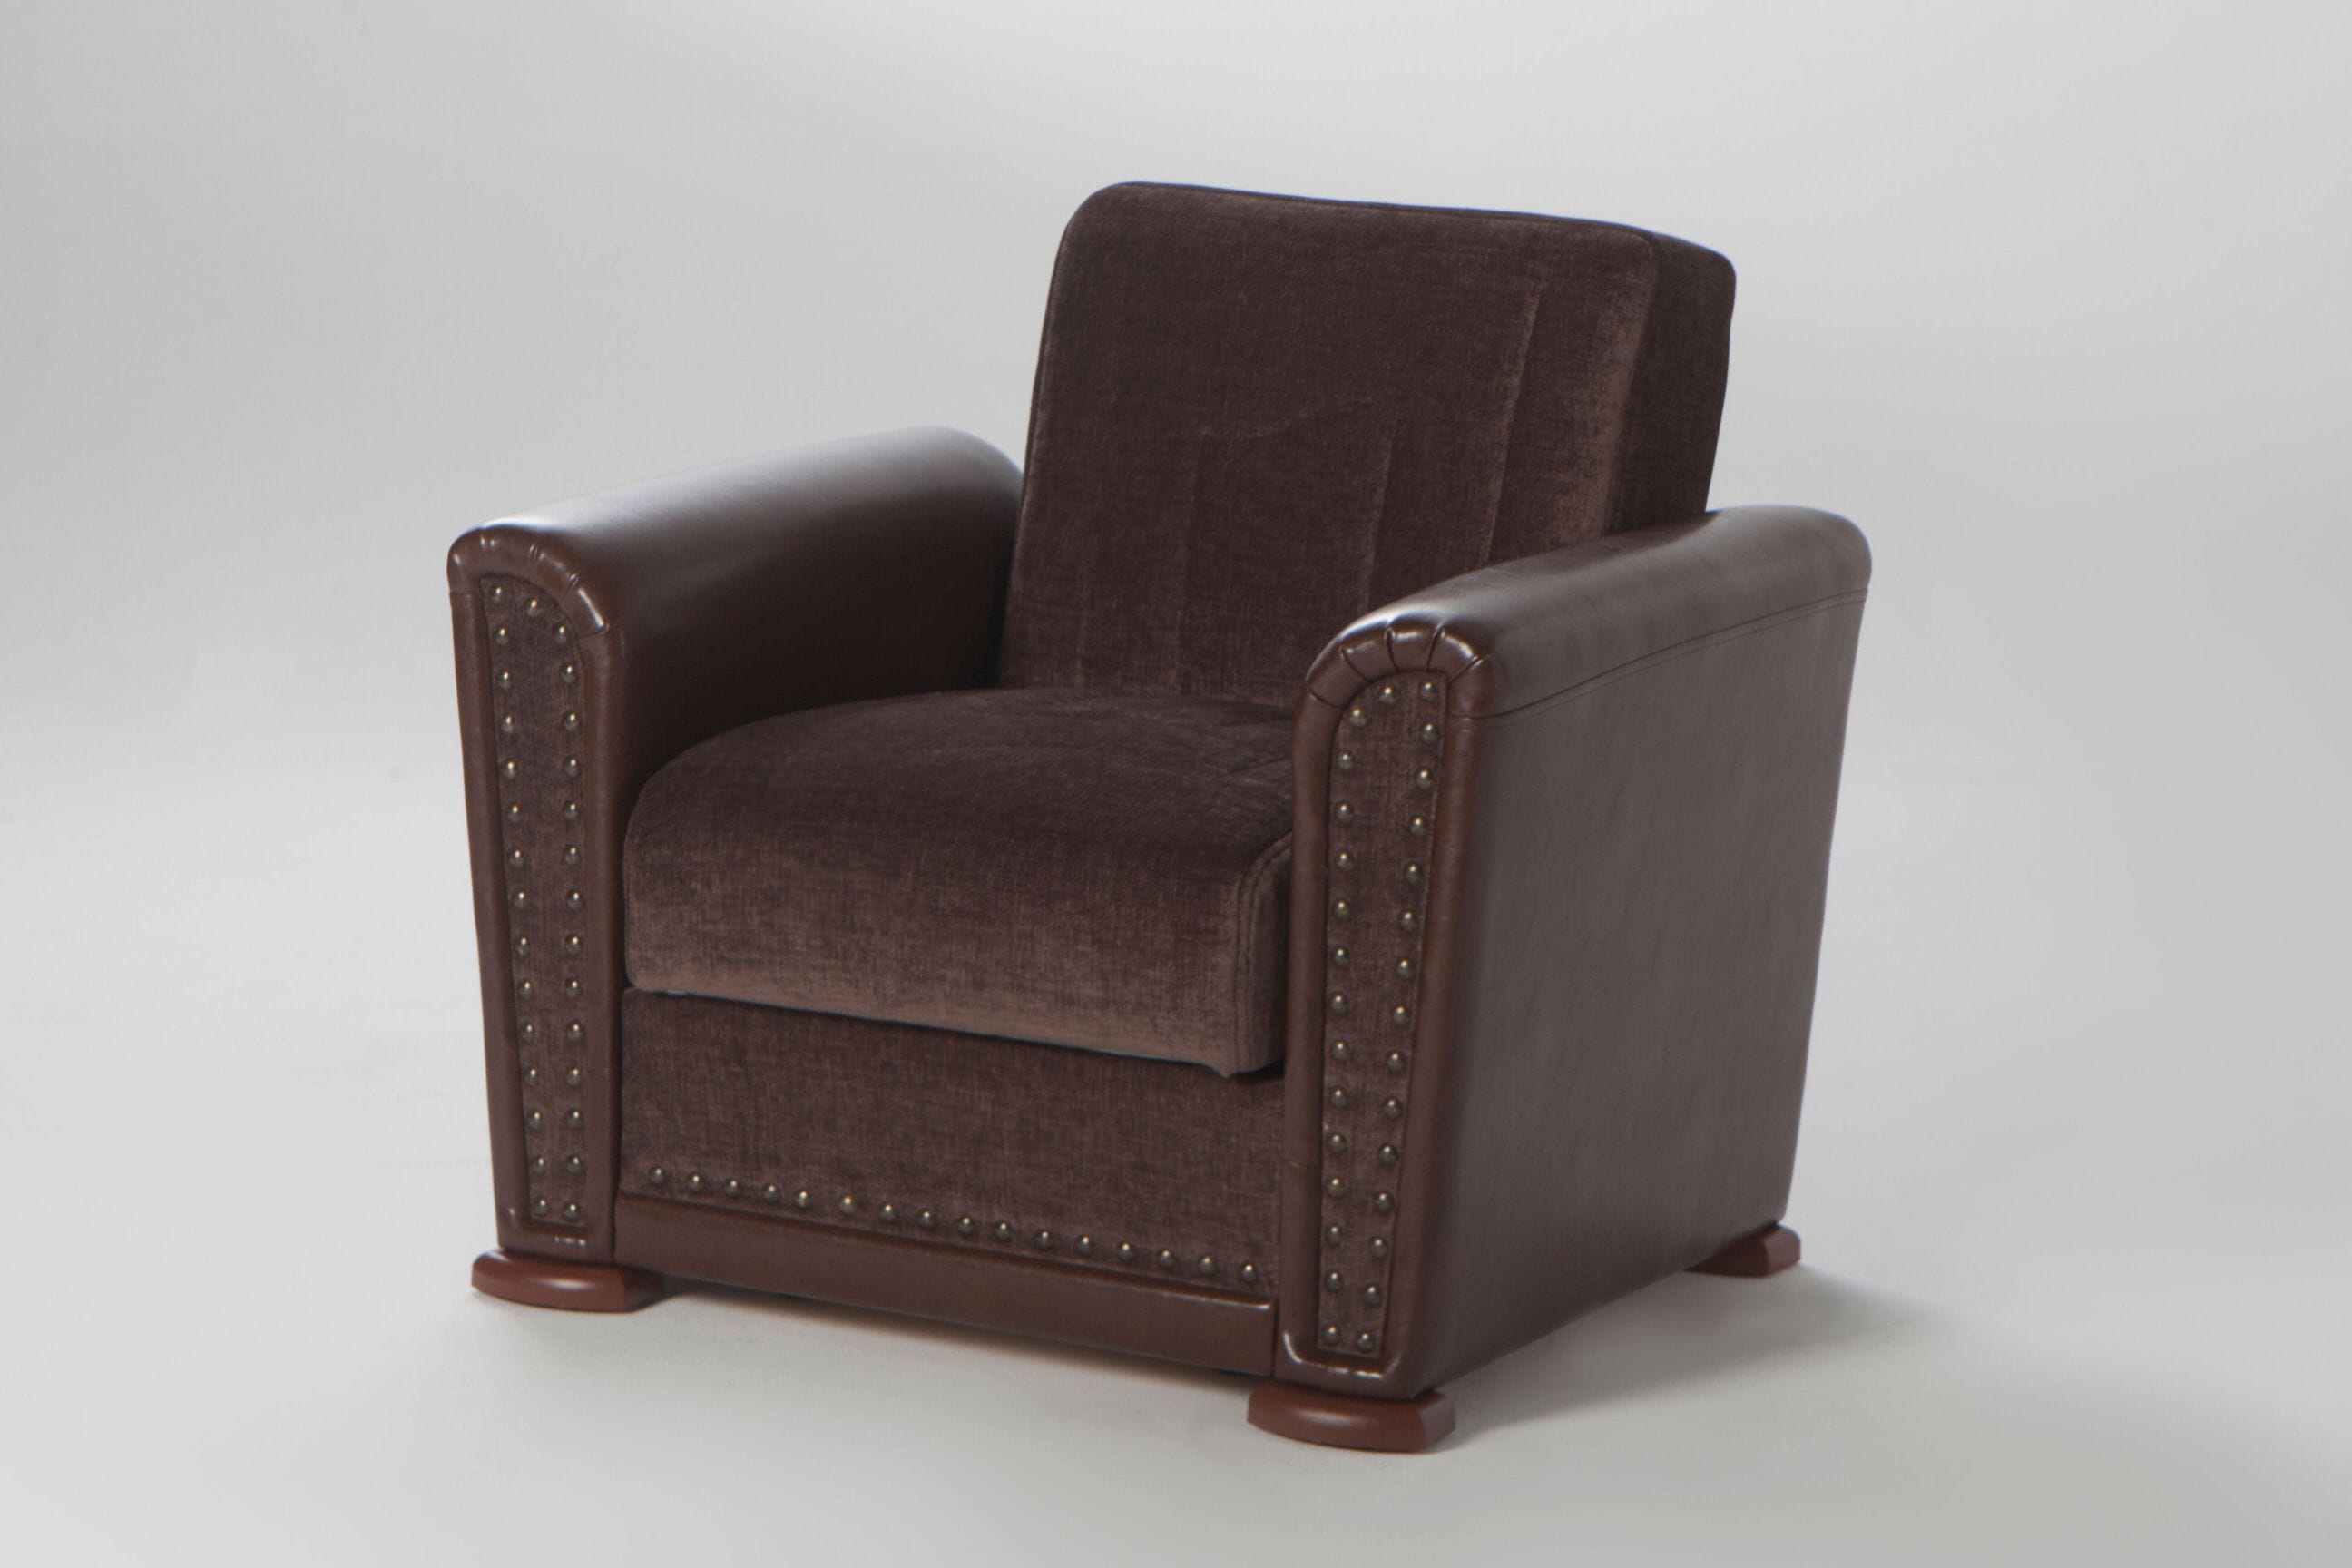 Alfa Jennifer Brown Sofa Love Chair Set By Istikbal Furniture